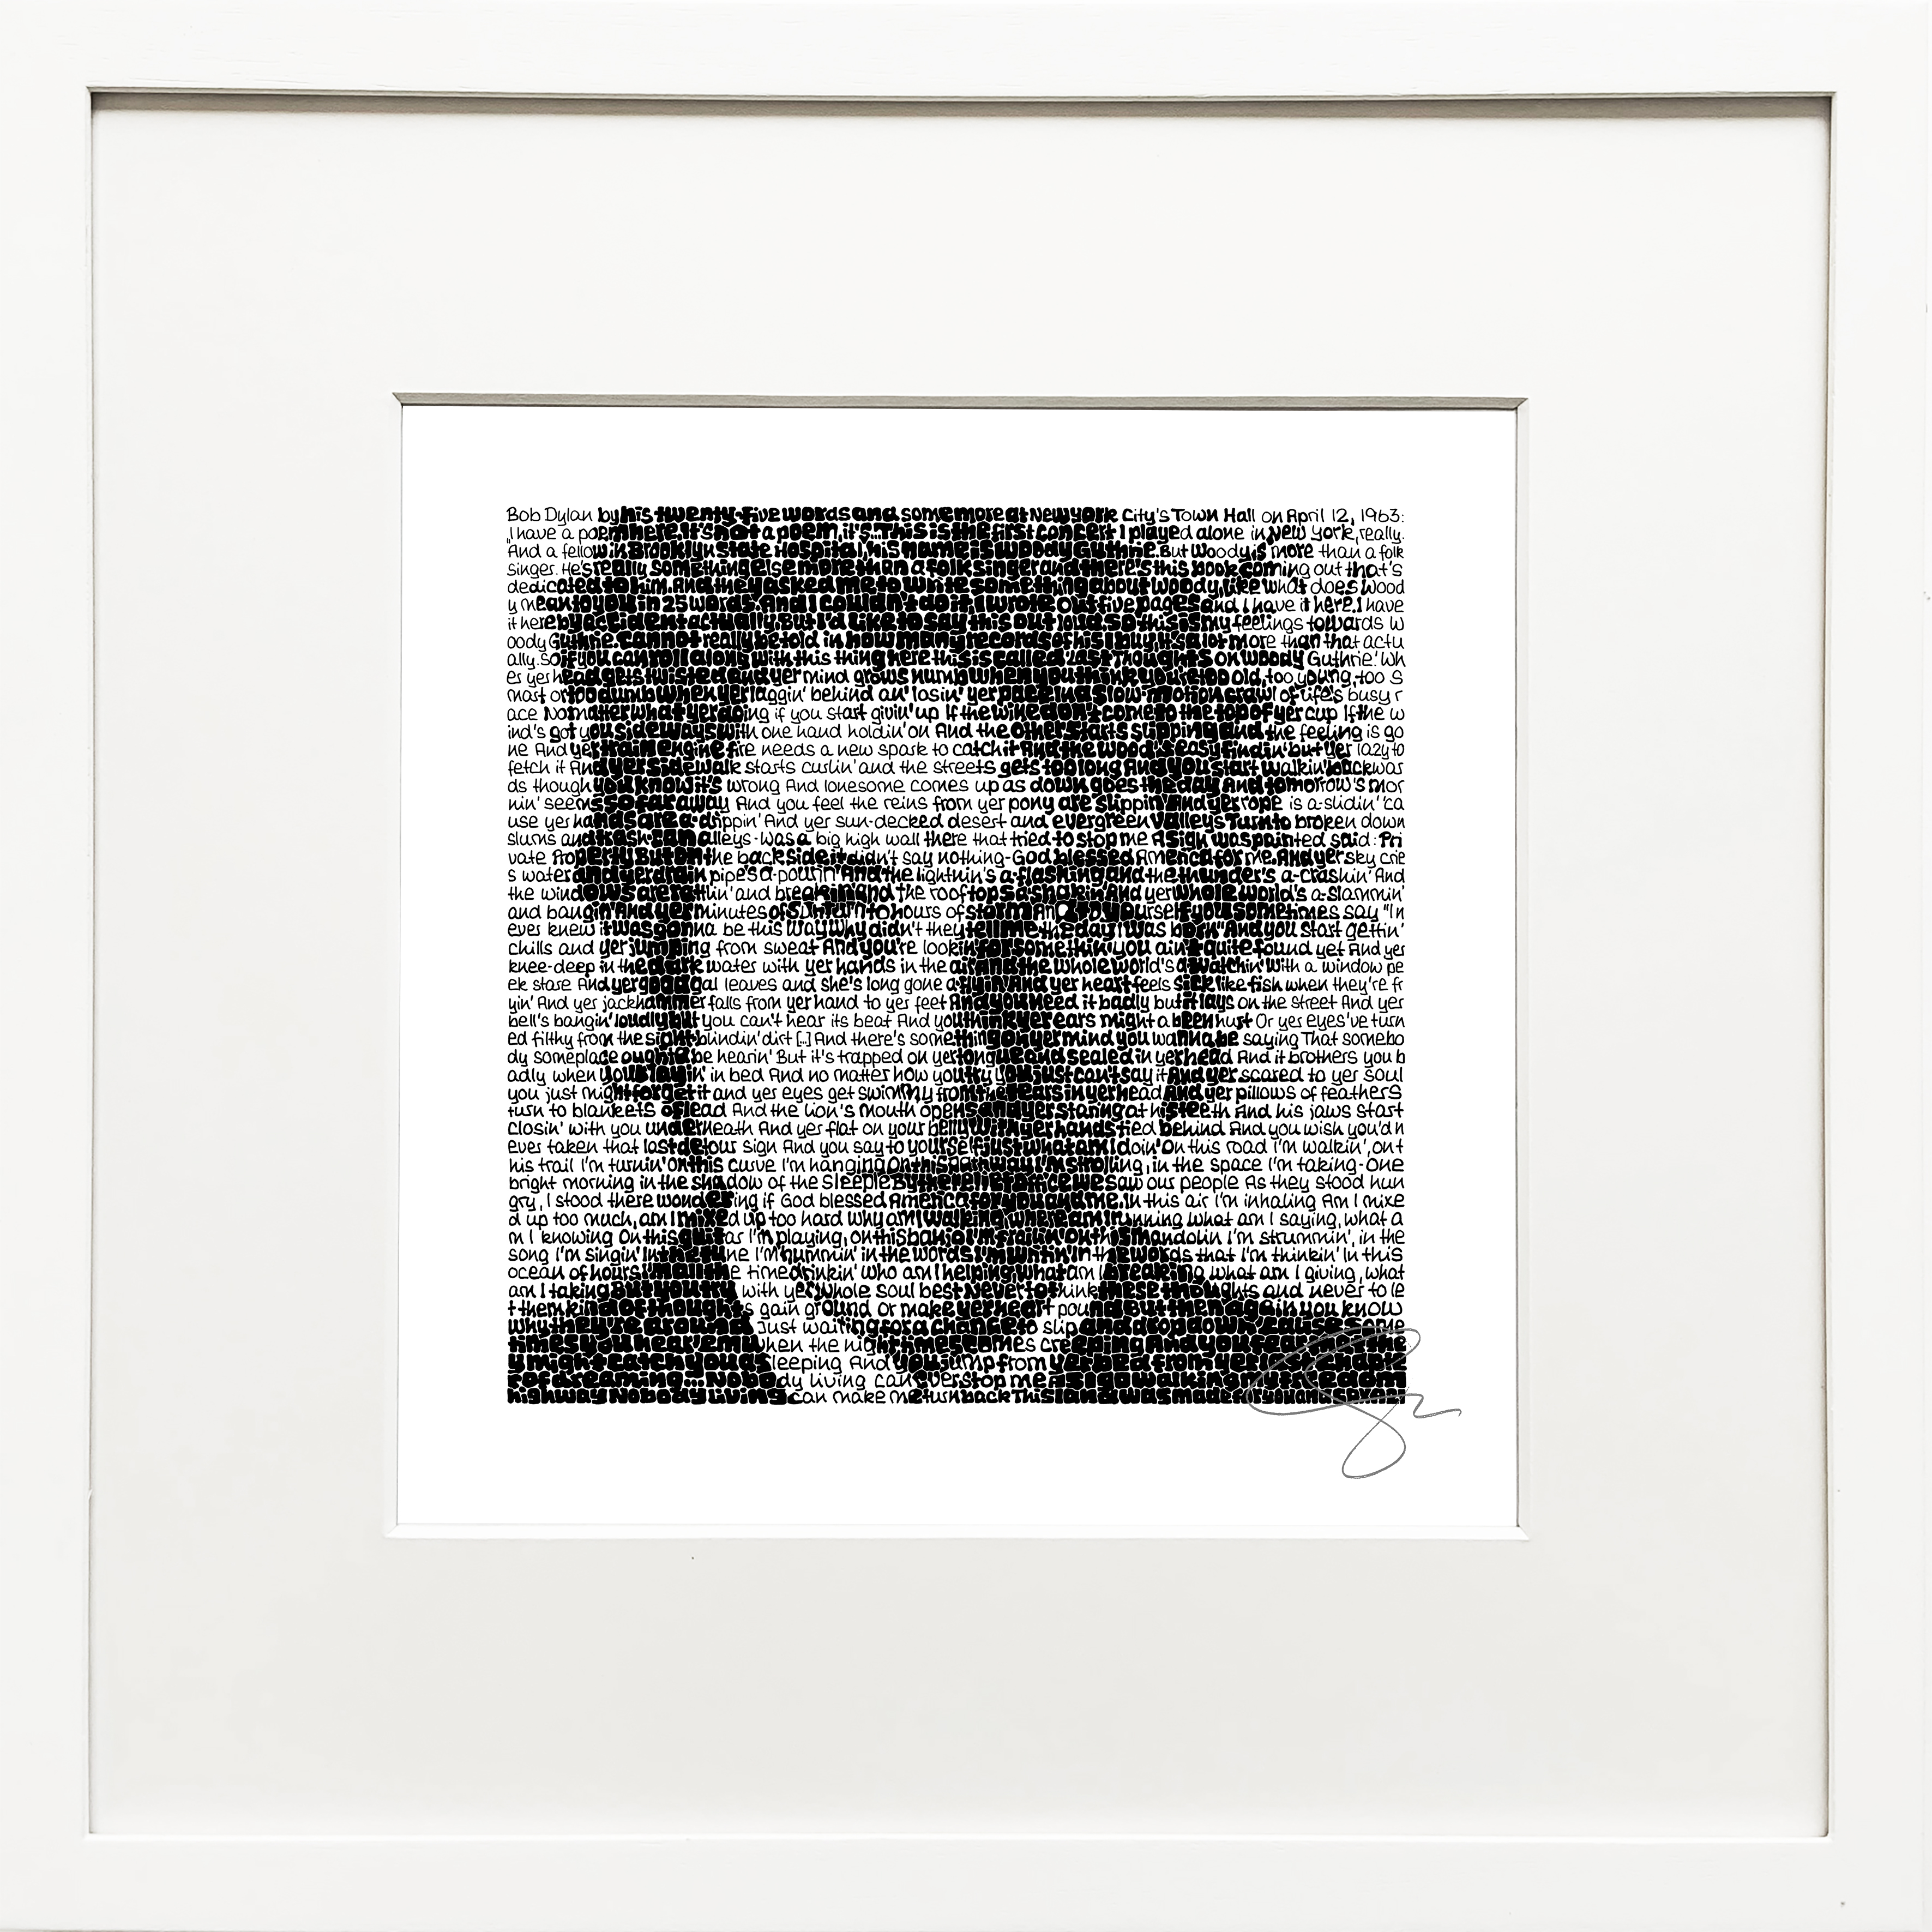 SAXA, Bob Dylan